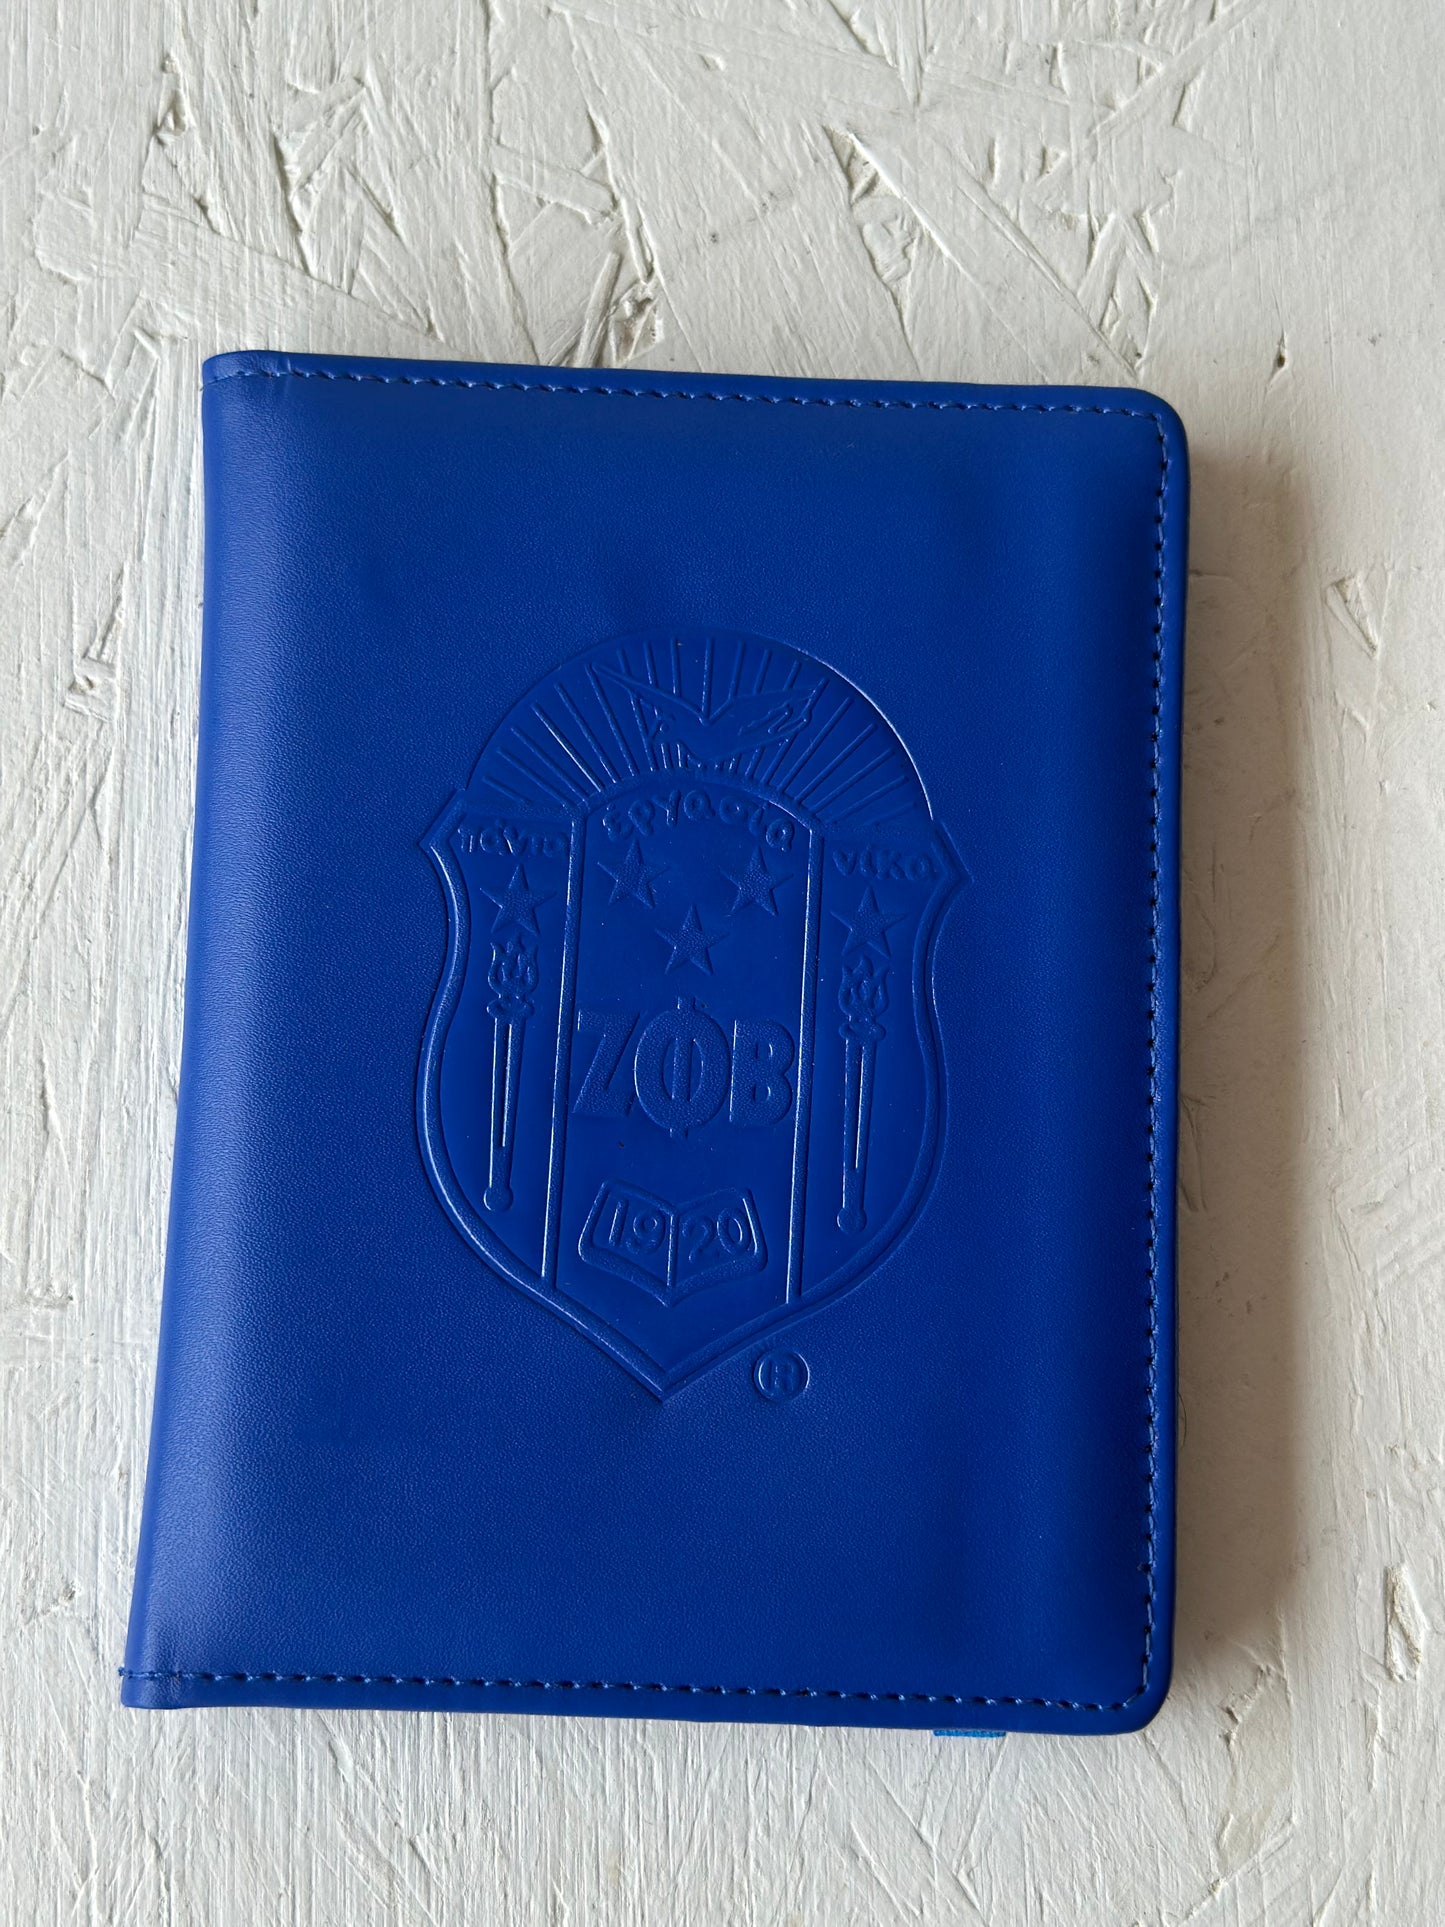 Zeta Phi Beta (ΖΦΒ) Sorority Artificial Leather Passport Cover- organizational shield print on front. Blue Color.